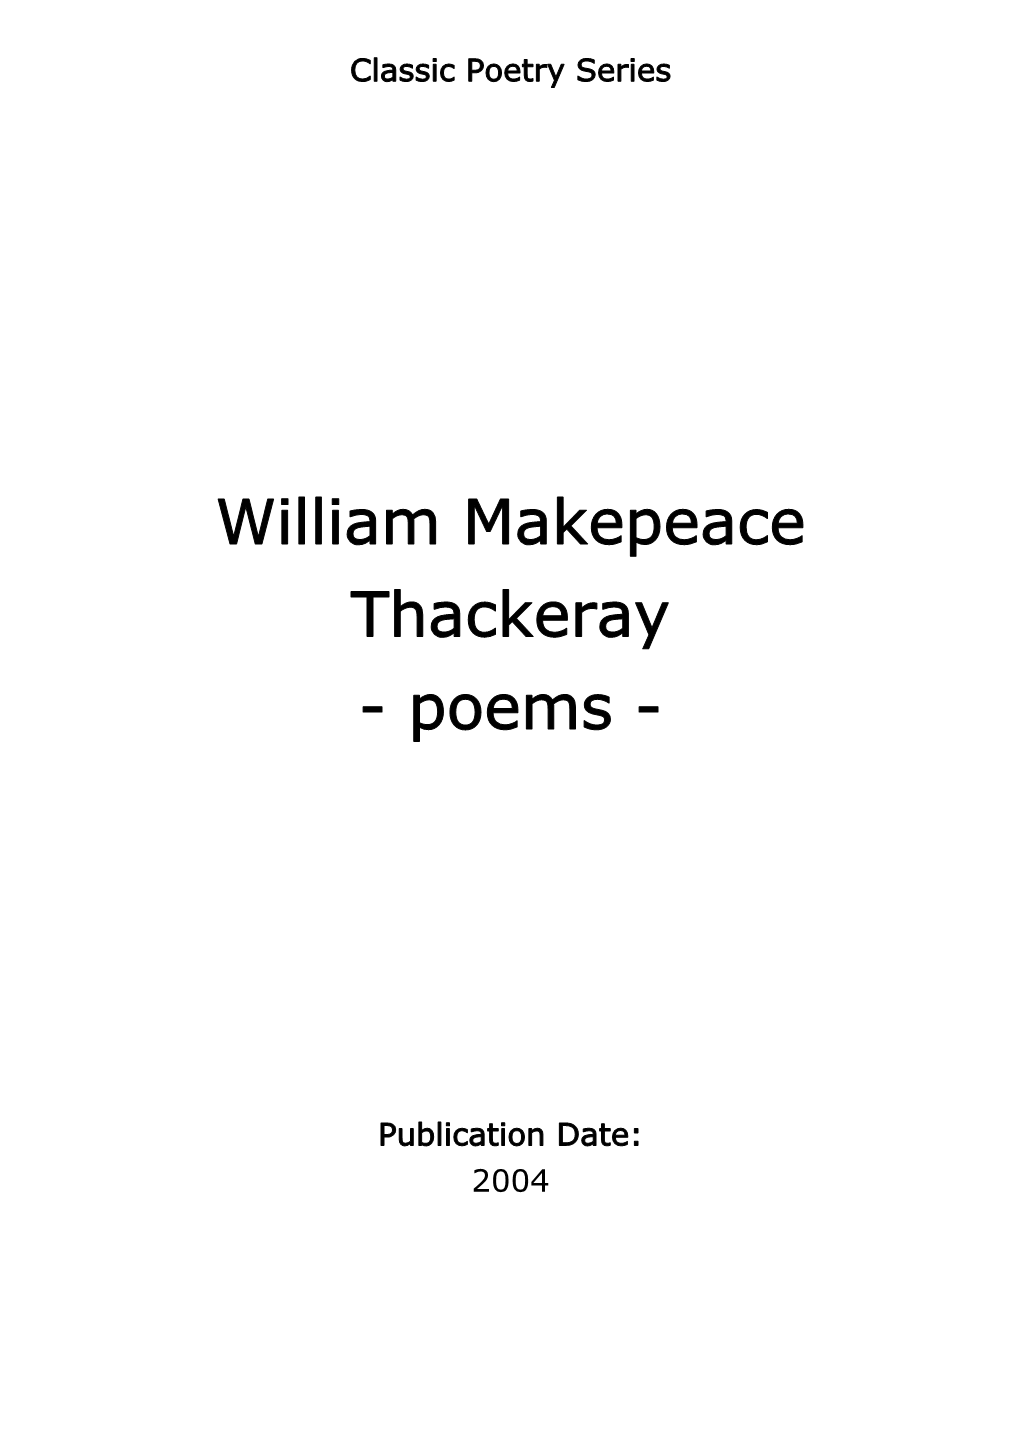 William Makepeace Thackeray - Poems